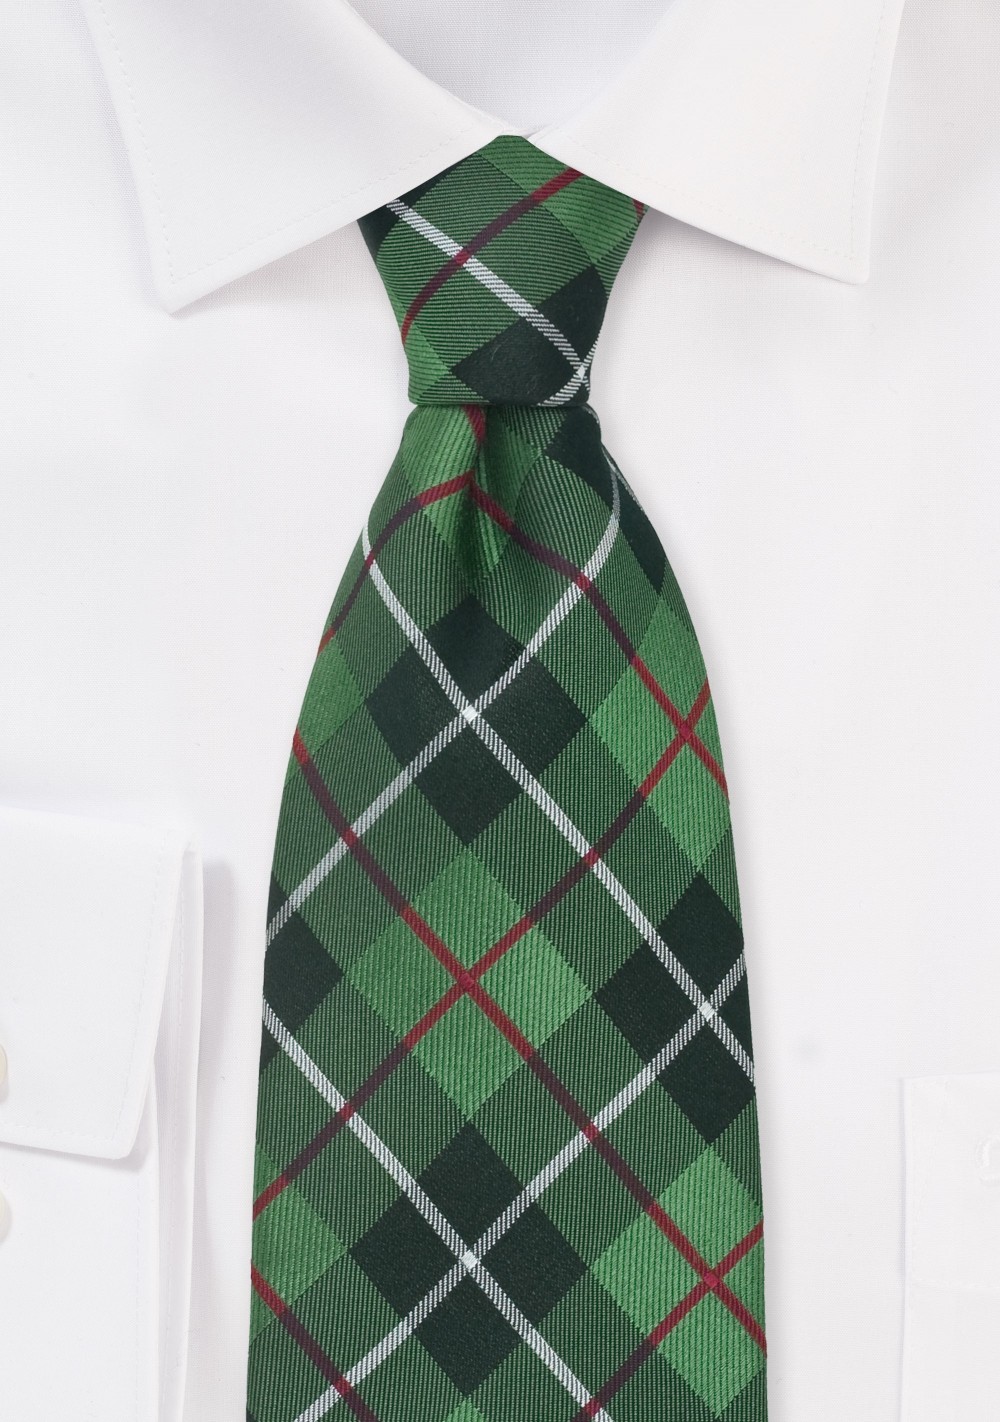 Green and Black Tartan Check Pattern Tie